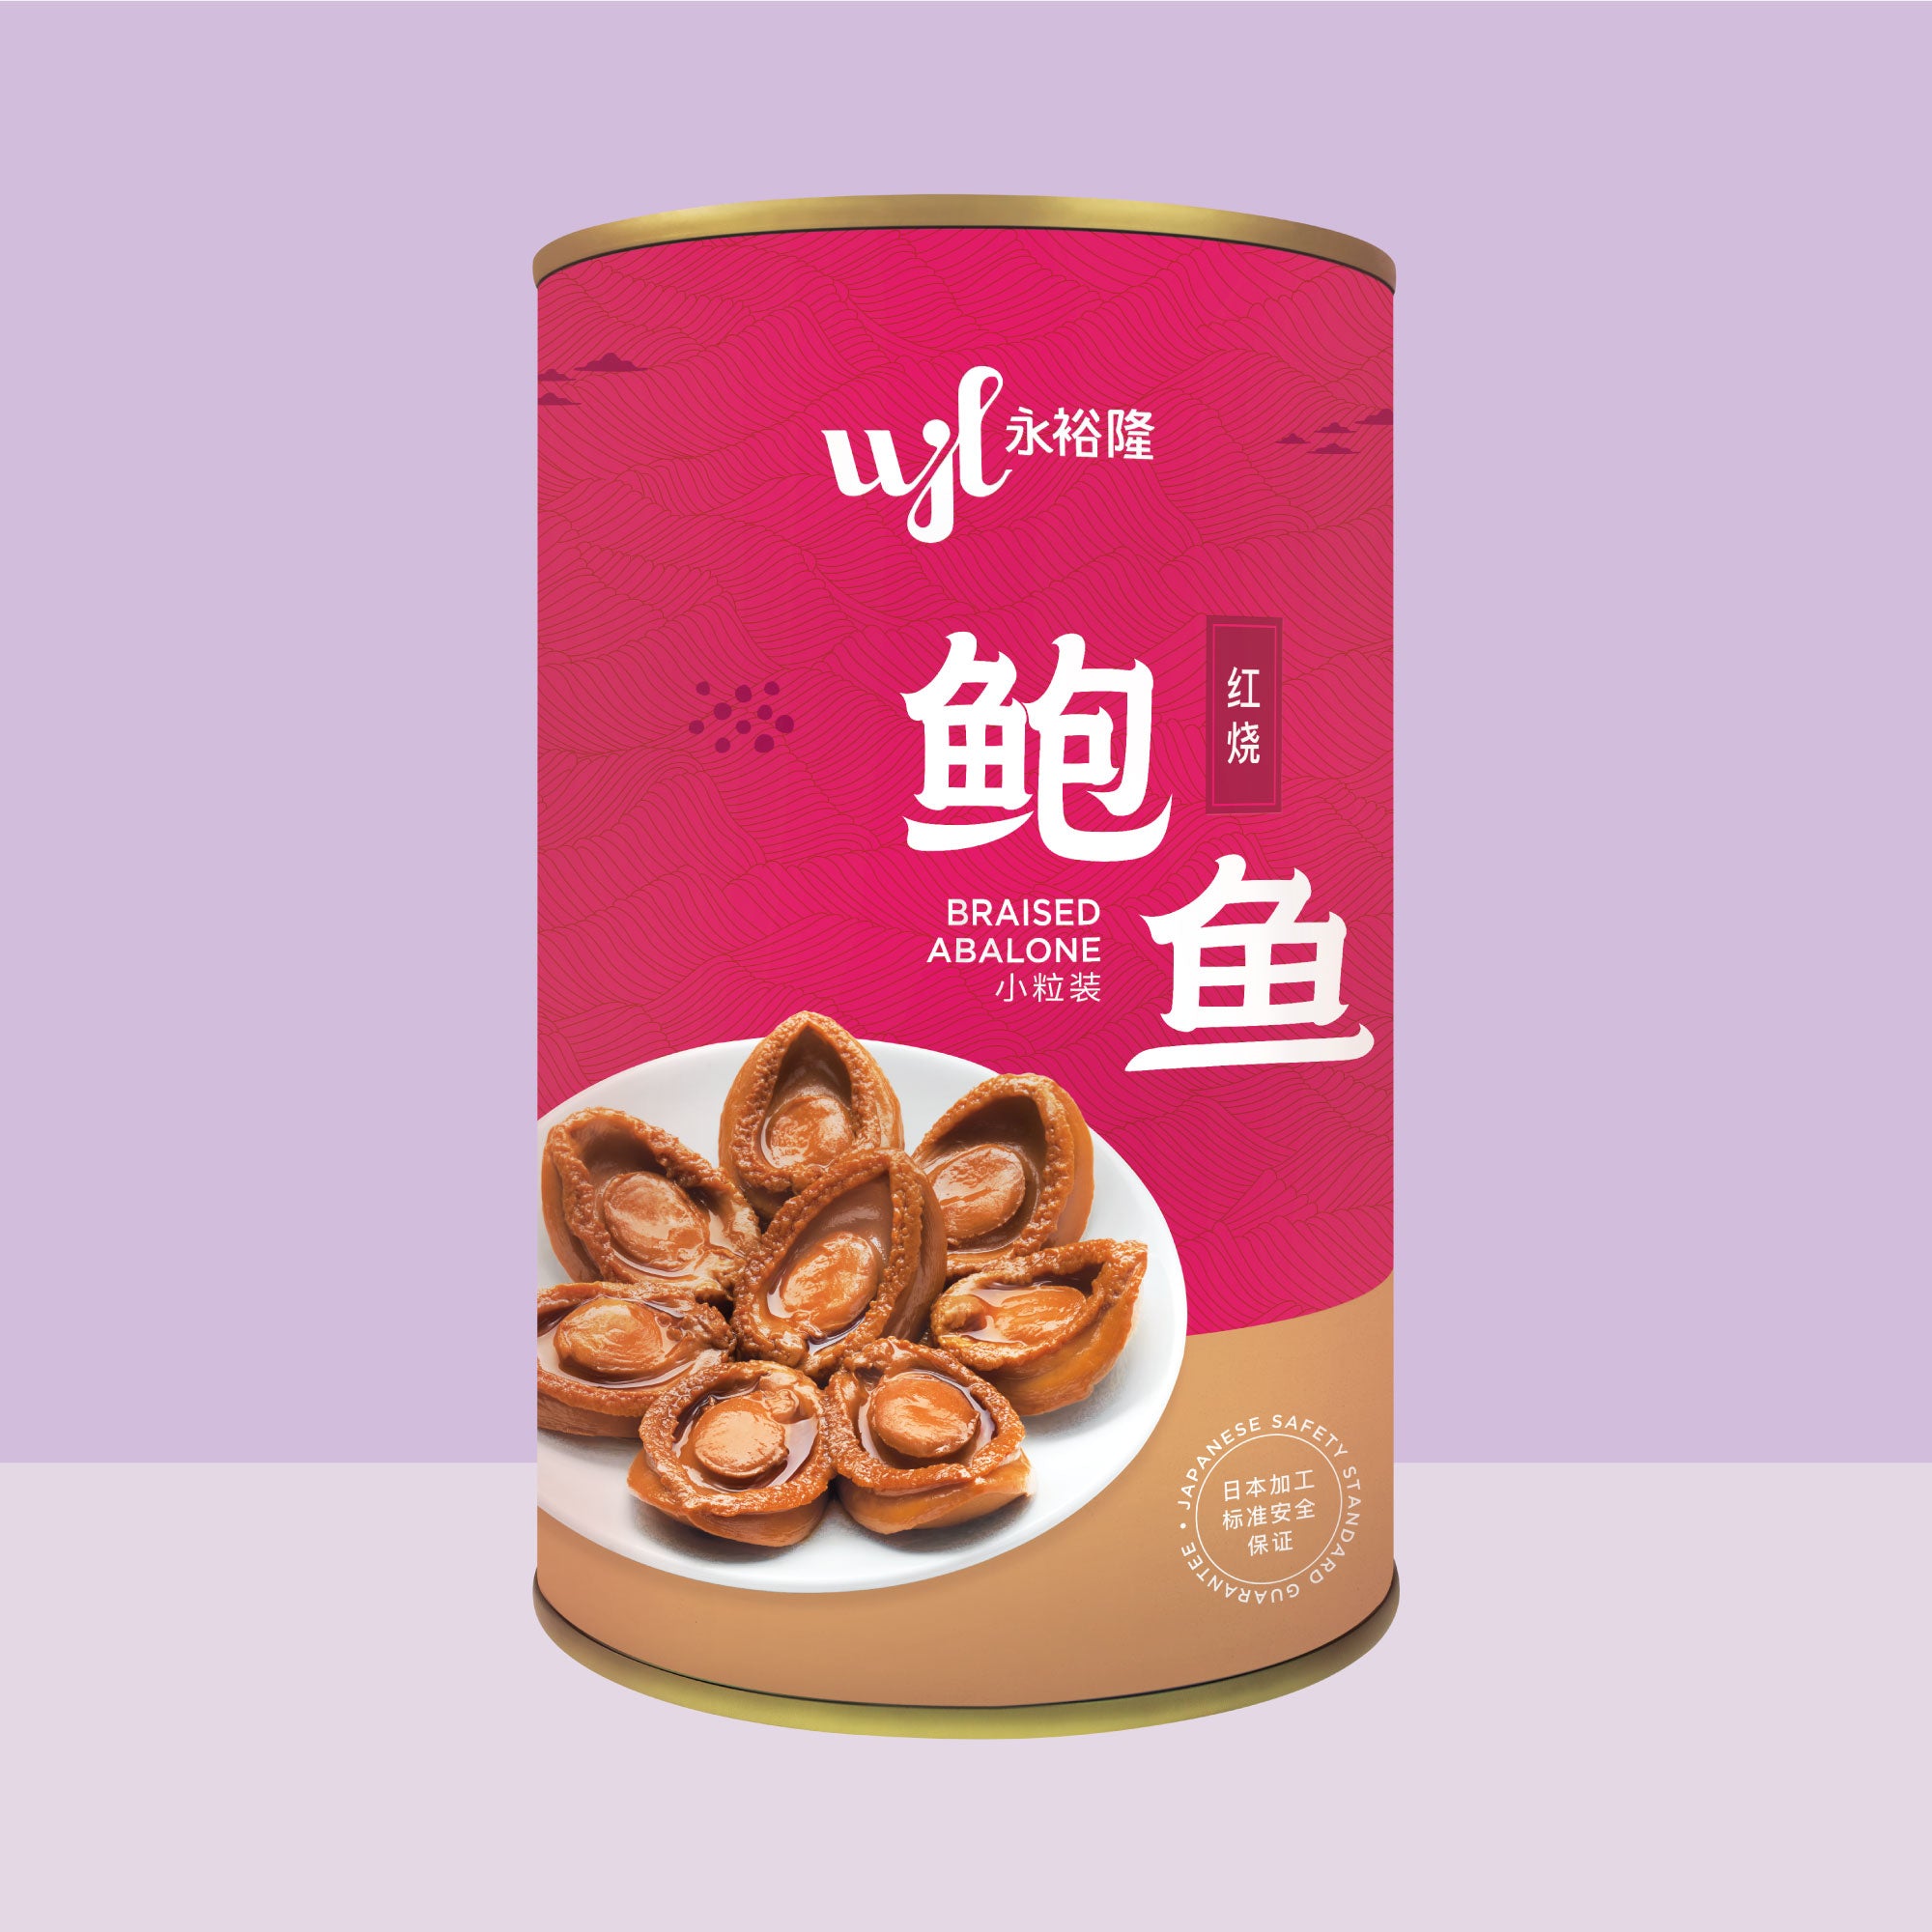 China Braised Baby Abalone 红烧小鲍鱼 (8-10pcs)